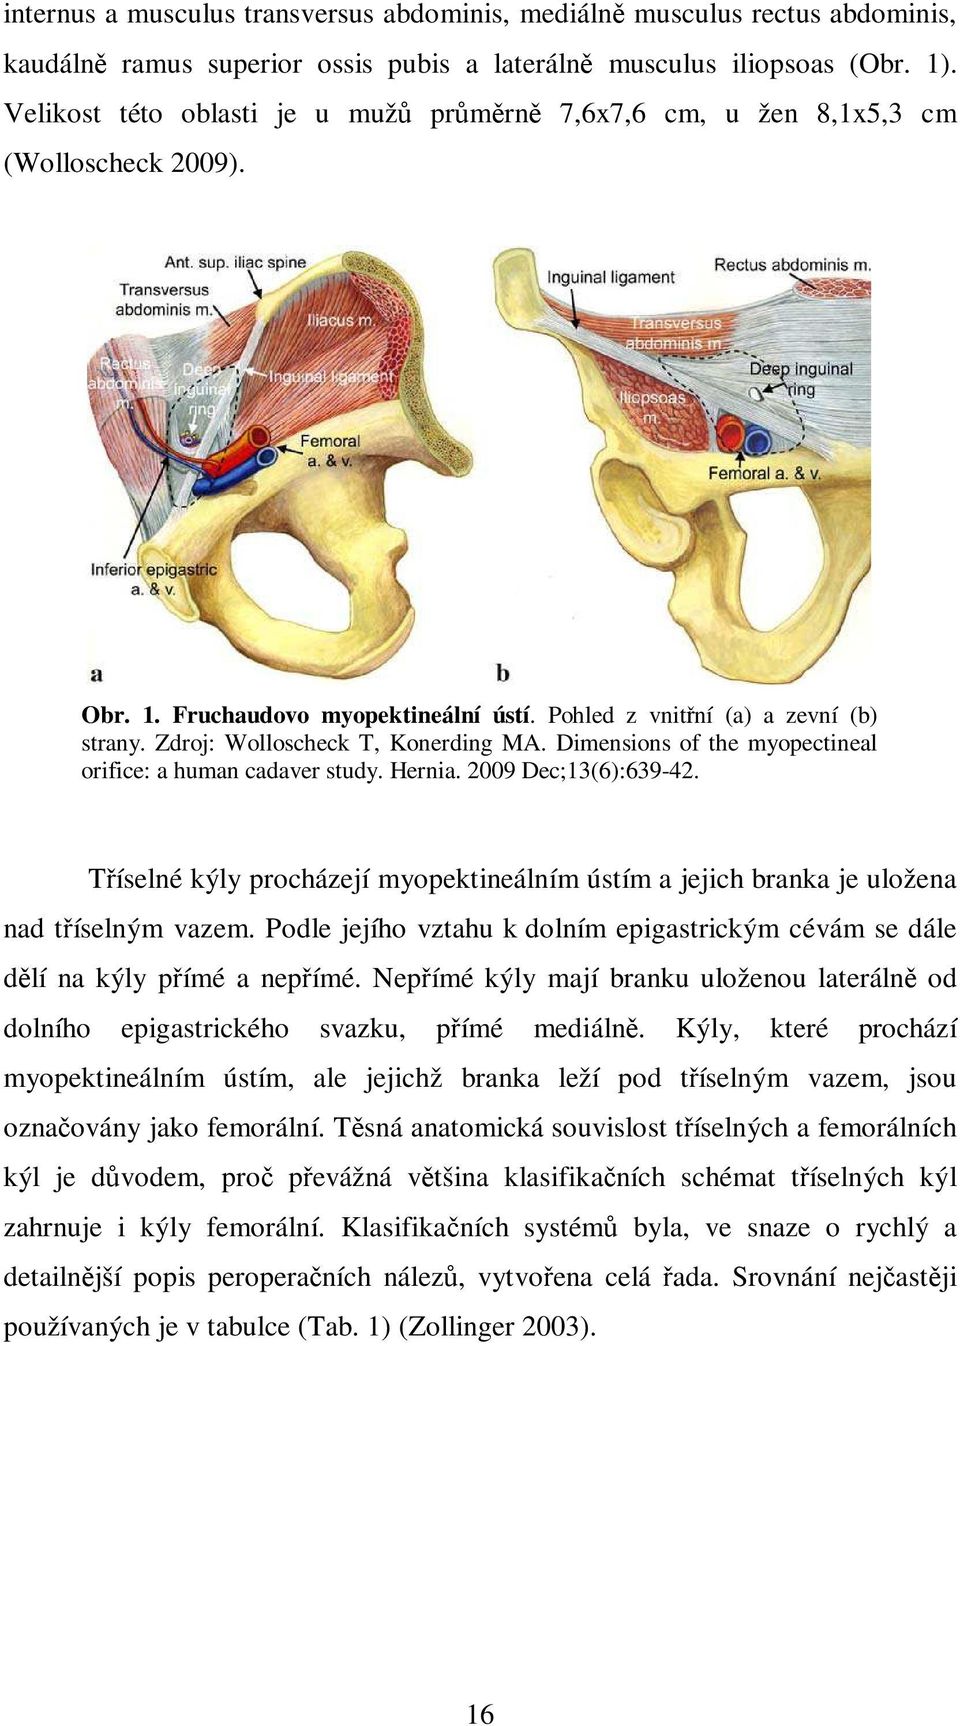 Zdroj: Wolloscheck T, Konerding MA. Dimensions of the myopectineal orifice: a human cadaver study. Hernia. 2009 Dec;13(6):639-42.